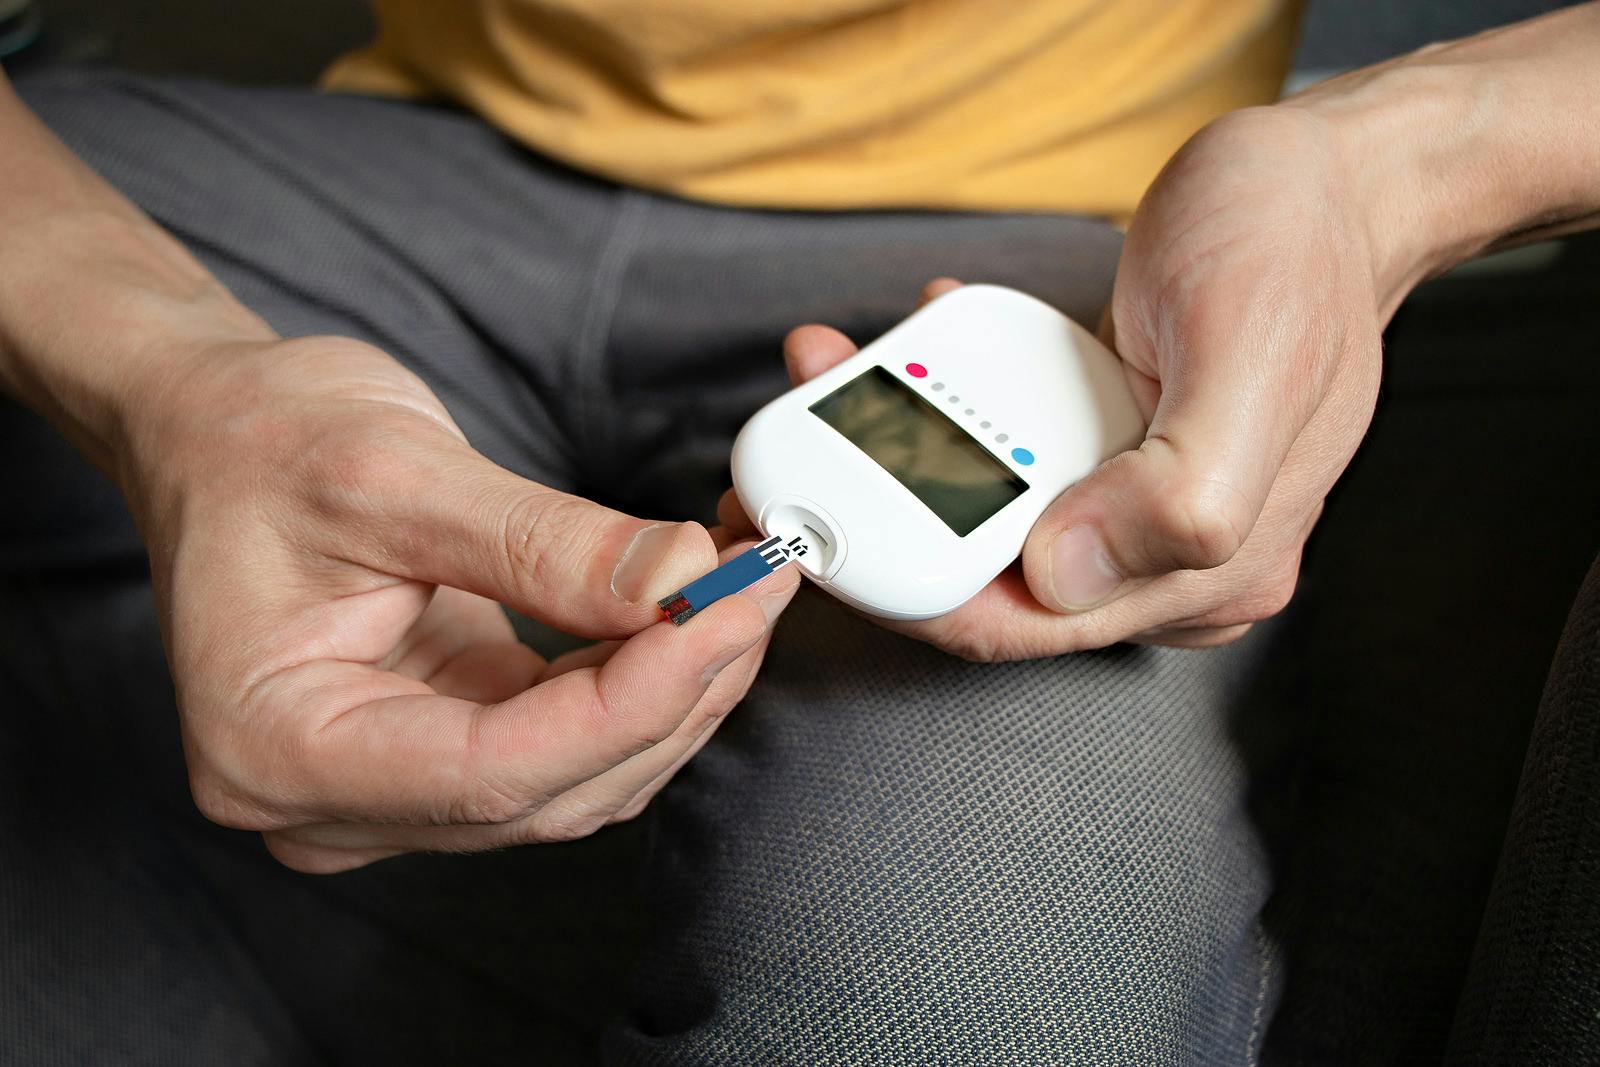 Man with type 2 diabetes checks blood sugar on glucometer to manage diabetes